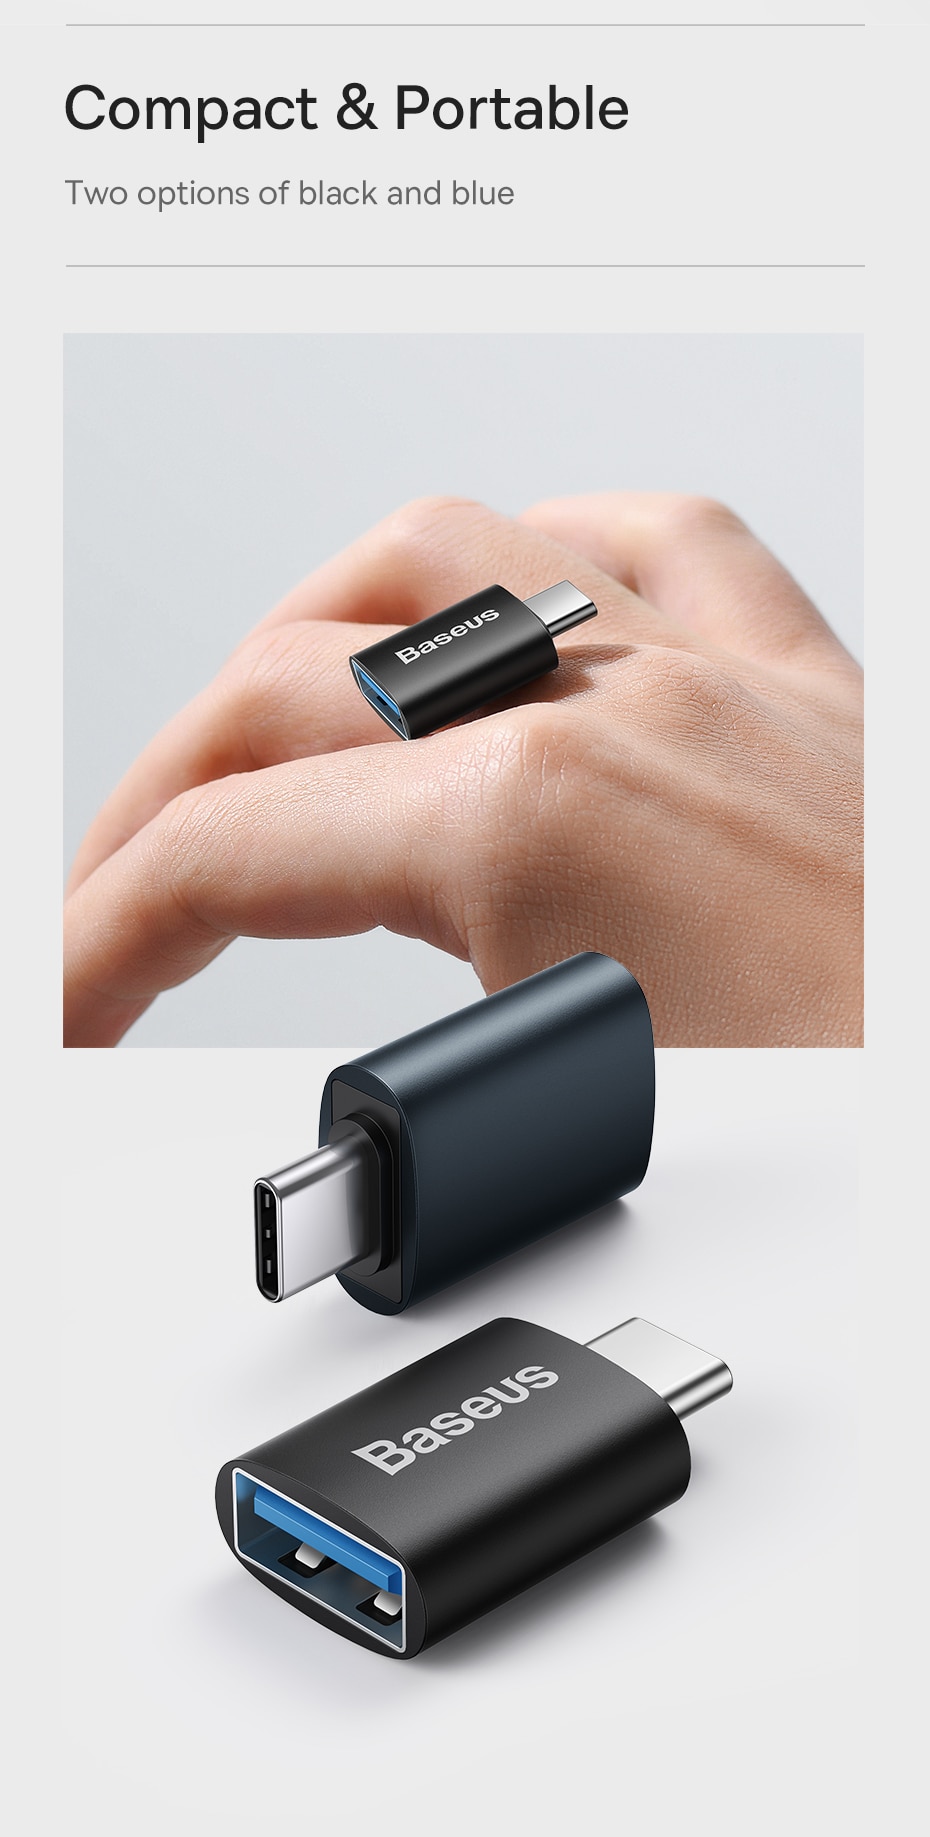 Baseus Ingenuity Series Mini OTG Adaptor Type-C to USB-A 3.1 Black